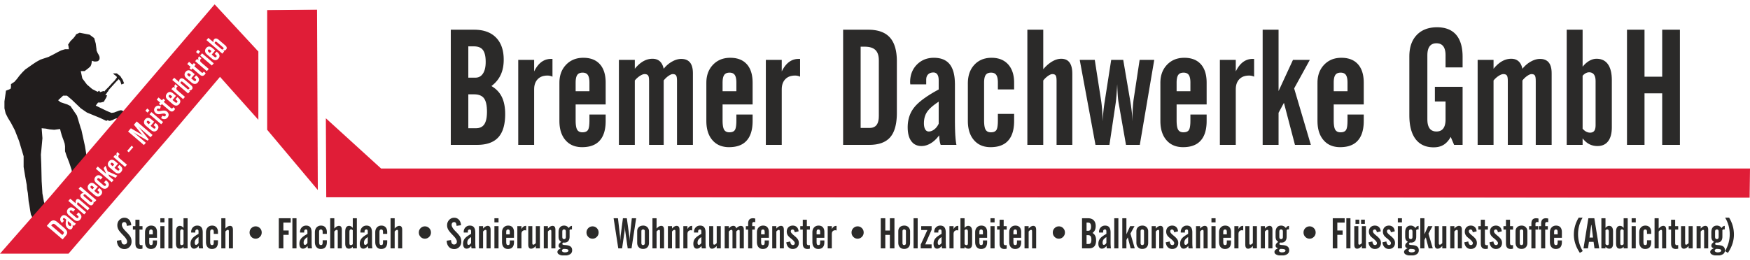 Bremer Dachwerke GmbH Logo